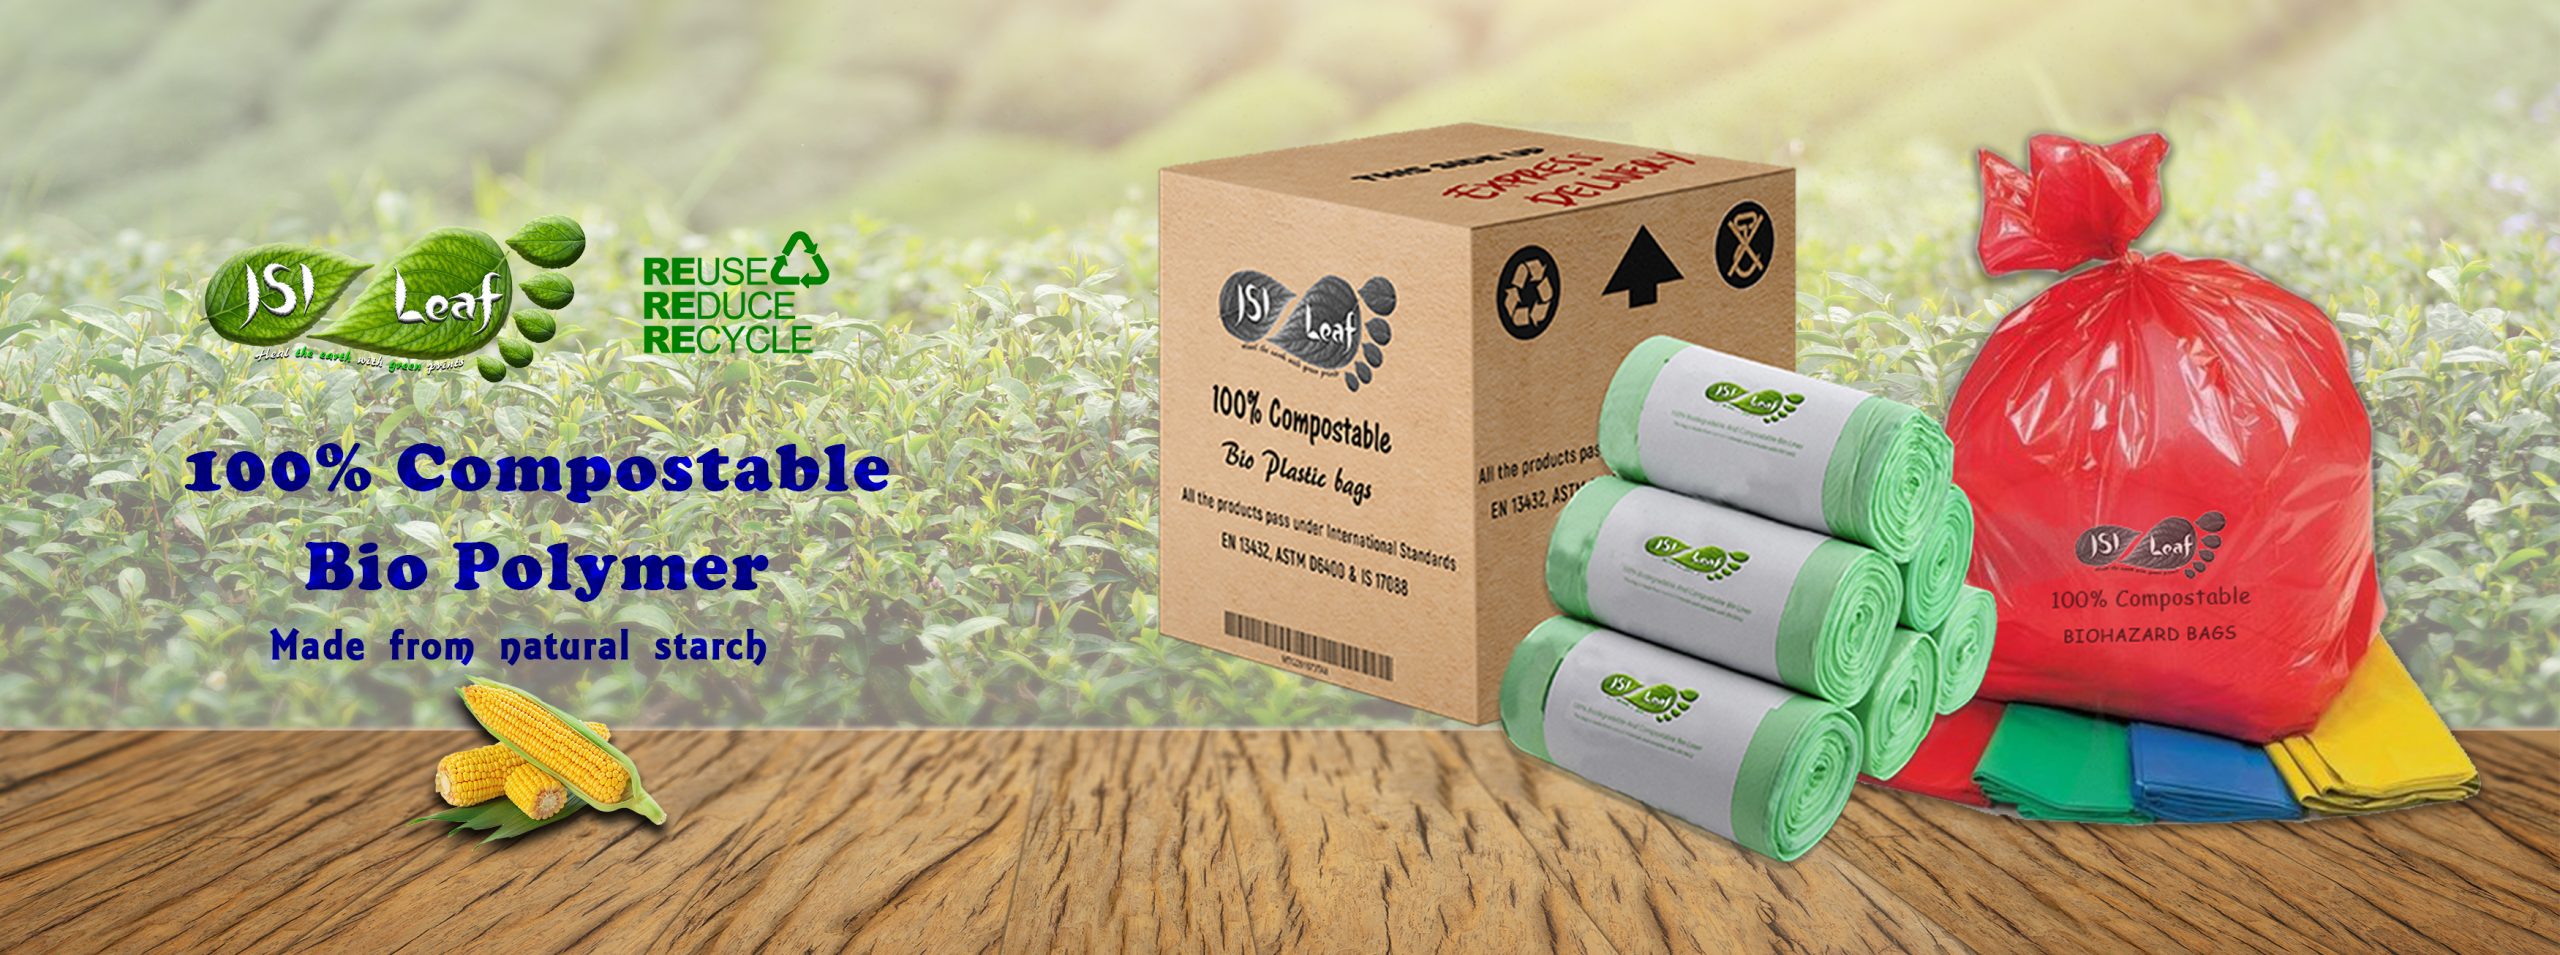 jsi leaf compostable plastic bags